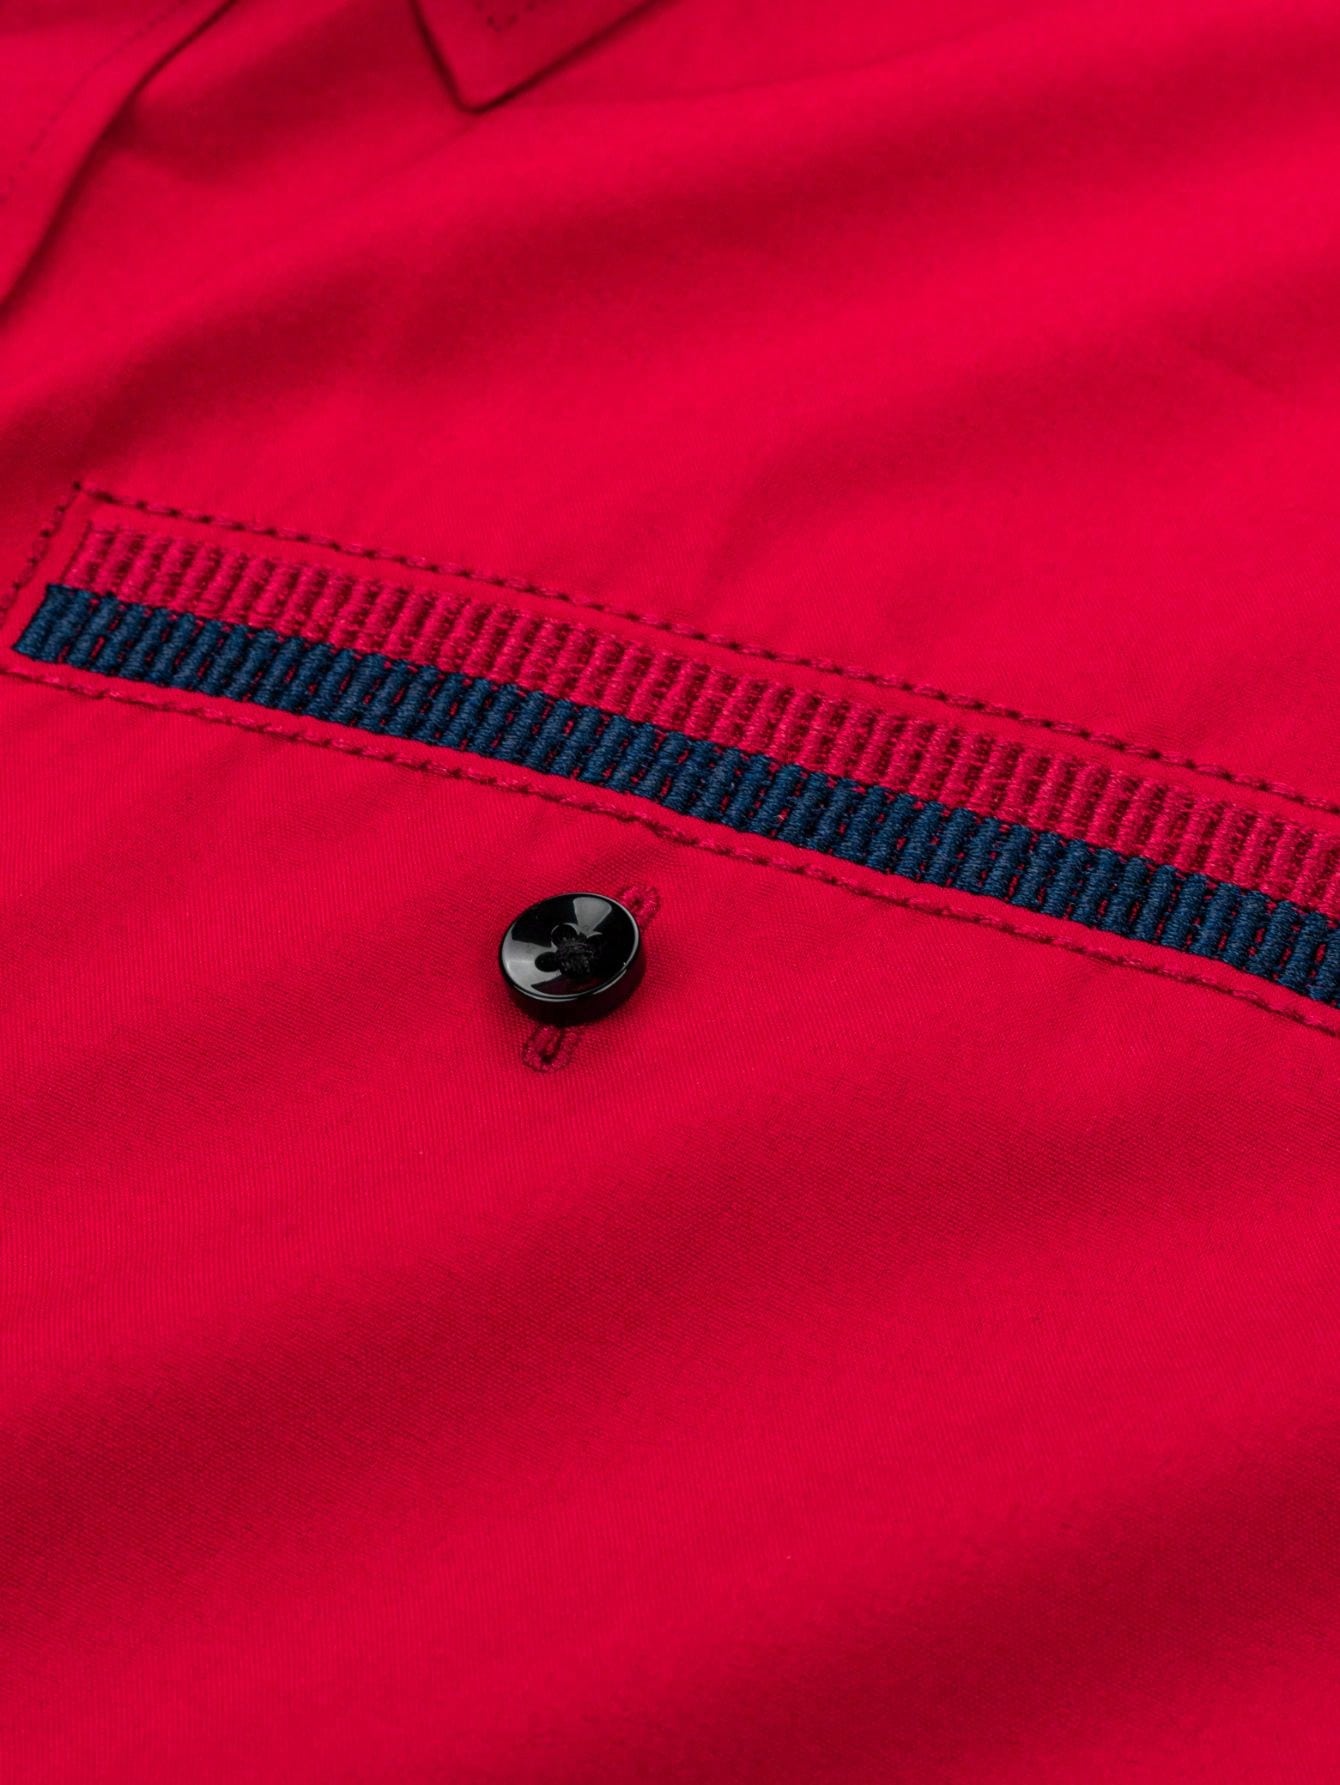 Manfinity Homme Men'S Button-Down Long Sleeve Shirt